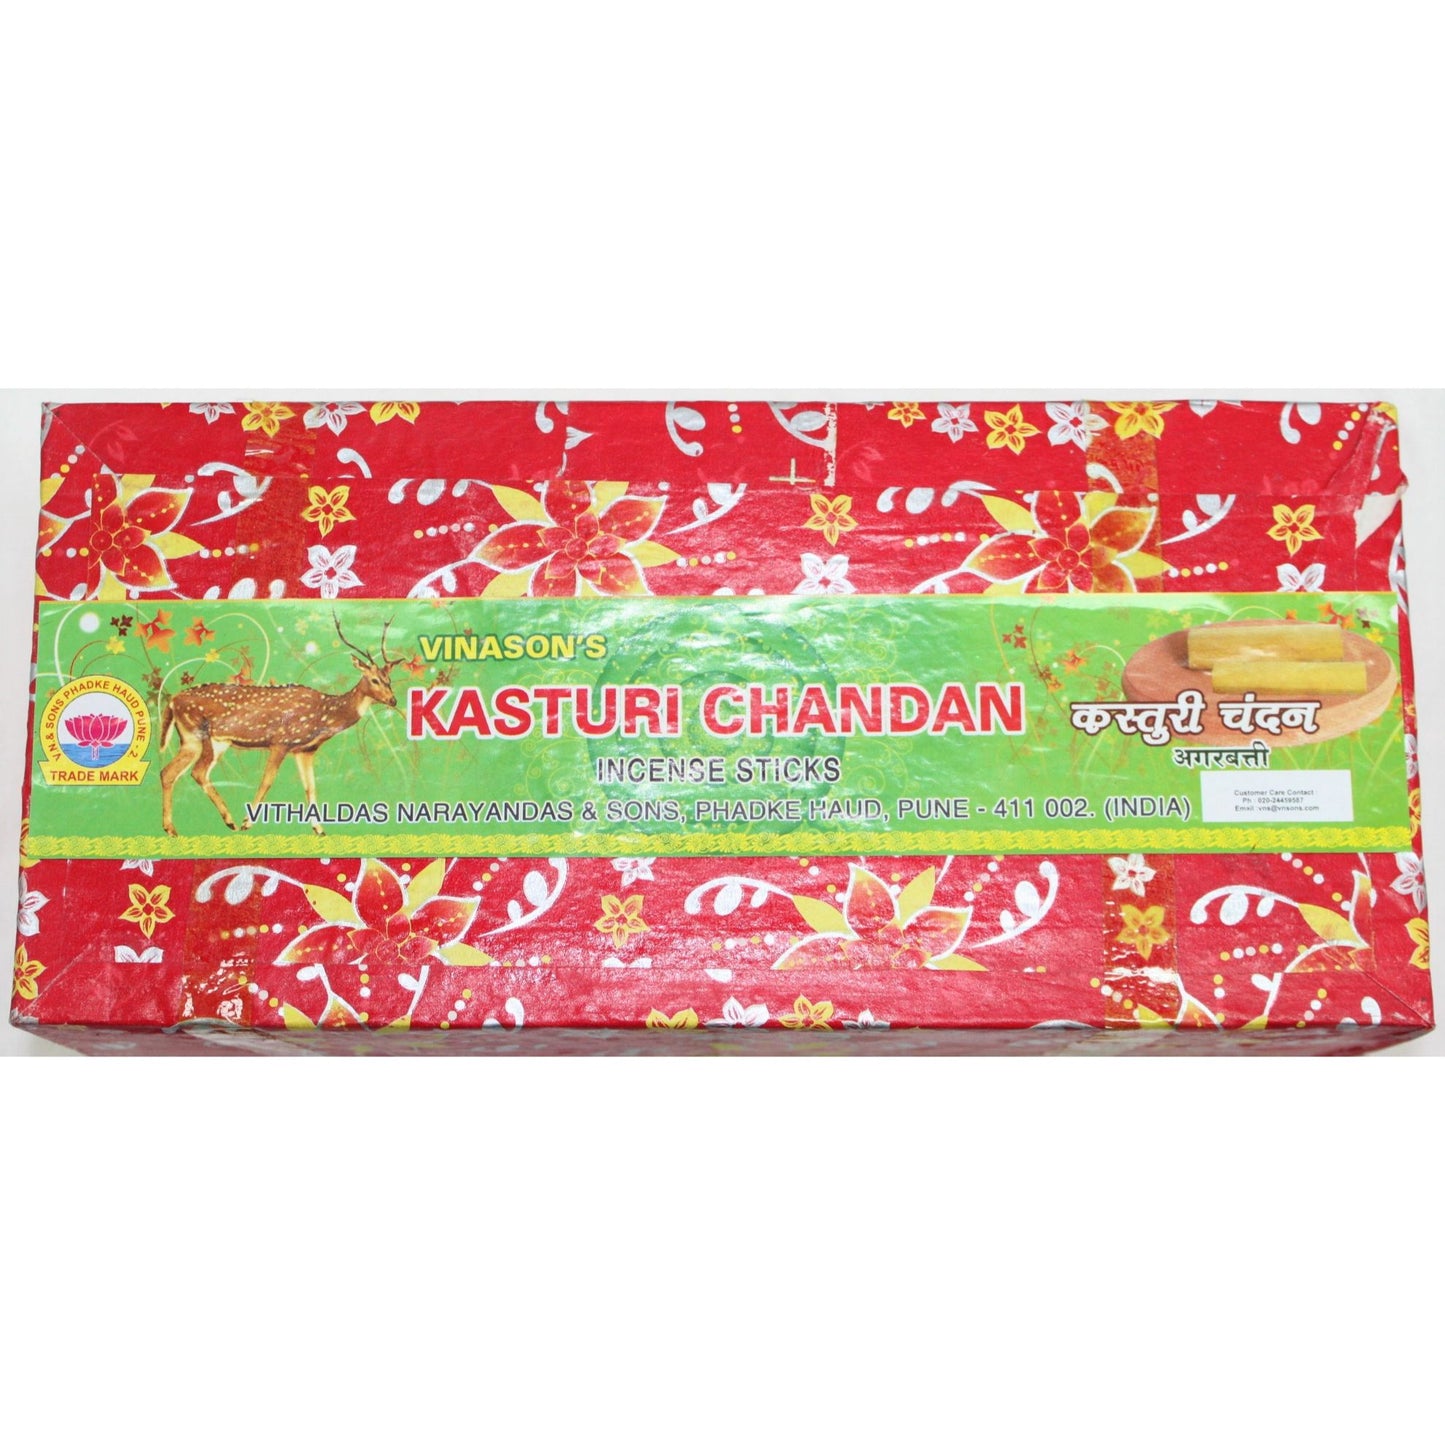 Vinason's - Incense Sticks, Kasturi Chandan